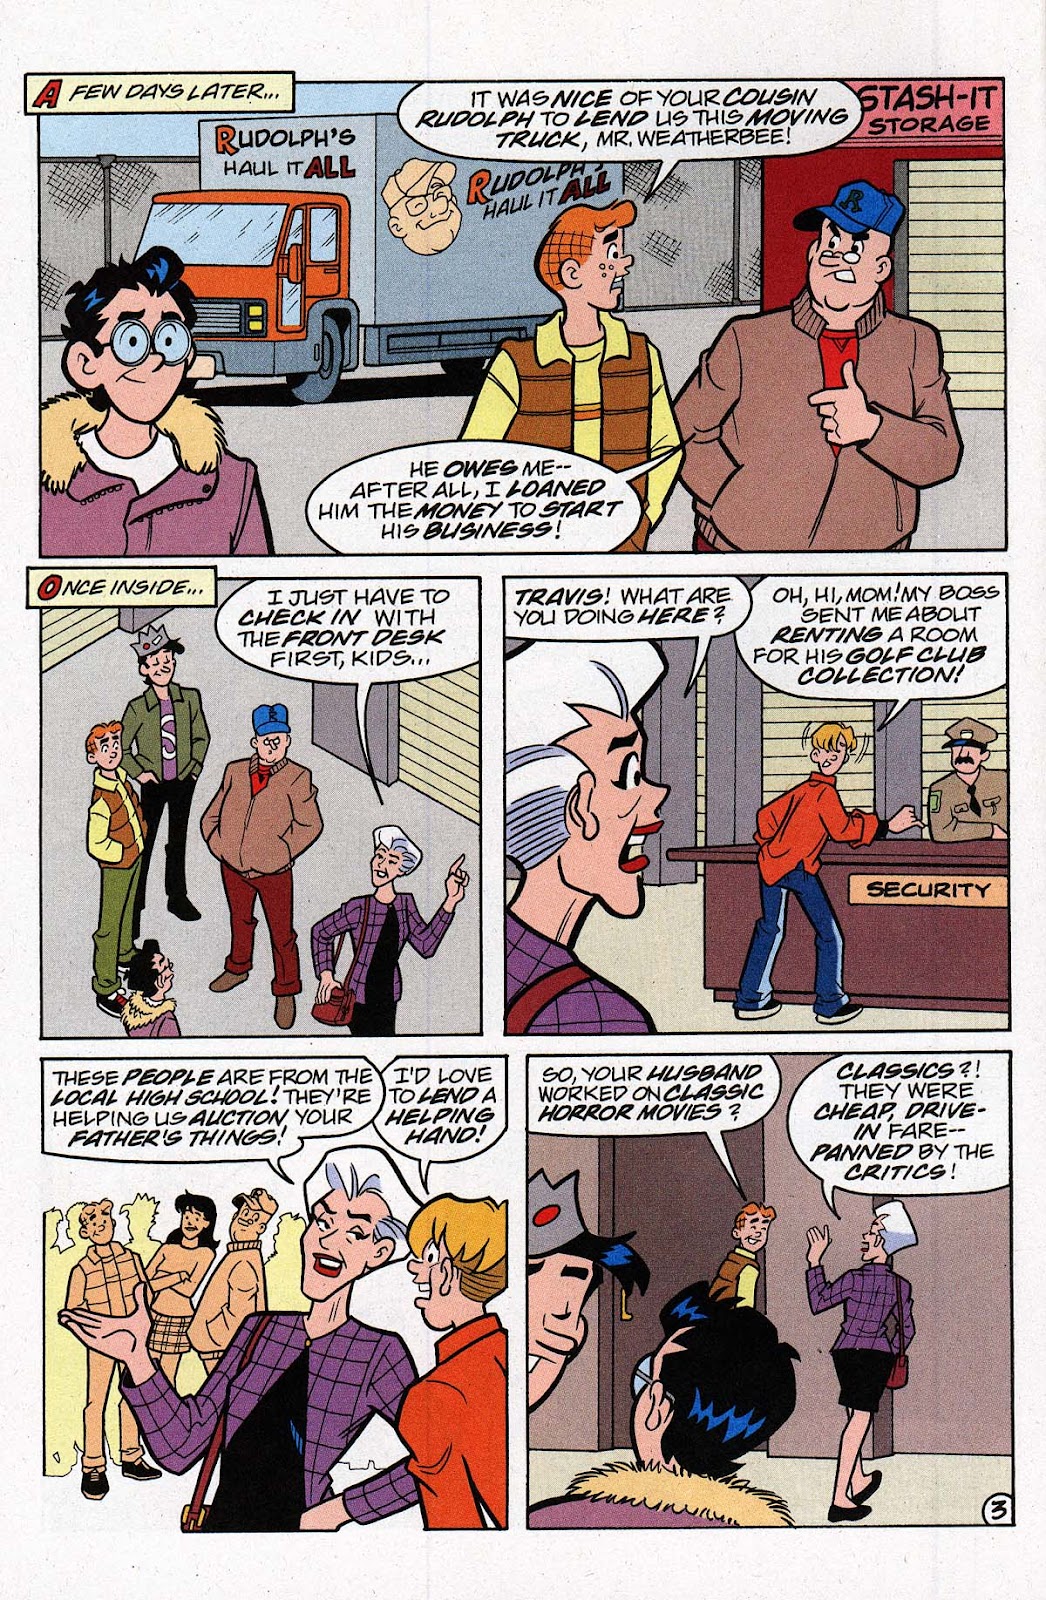 Weirdest Mysteries Archie Porn - Archie s Weird Mysteries Issue 27 | Viewcomic reading comics ...